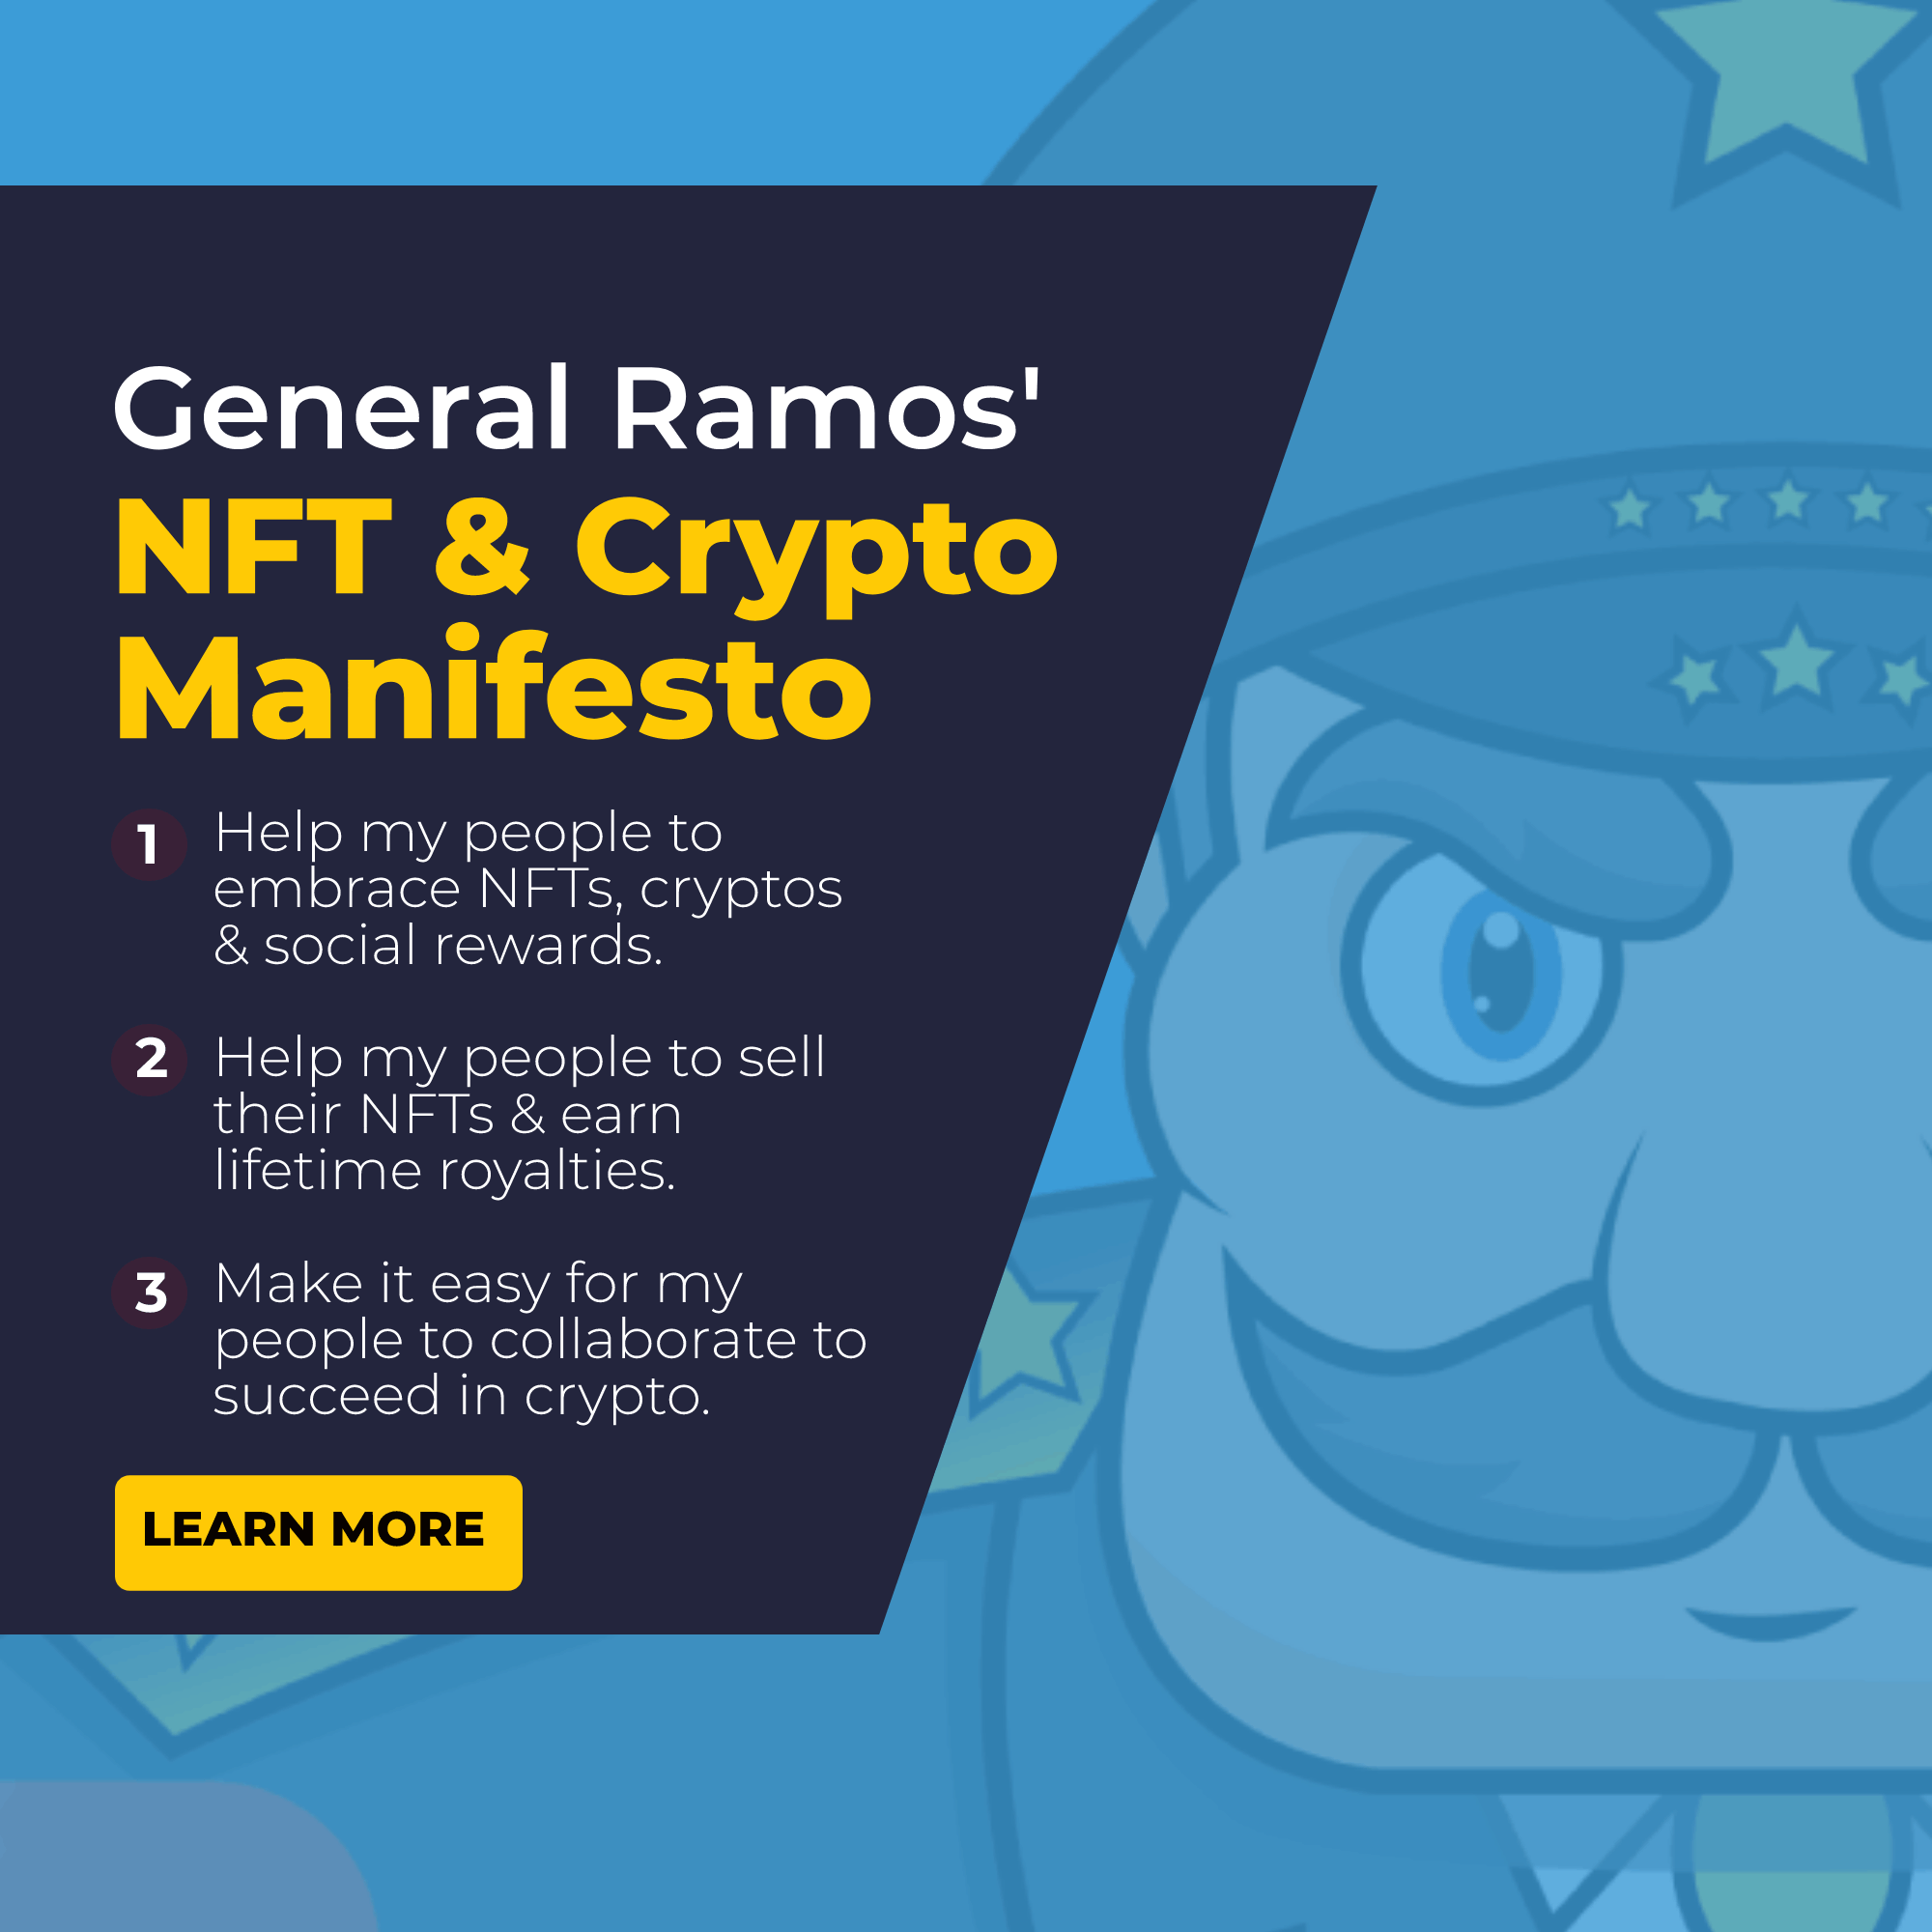 GeneralRamos-manifesto149kb-updated_1.png